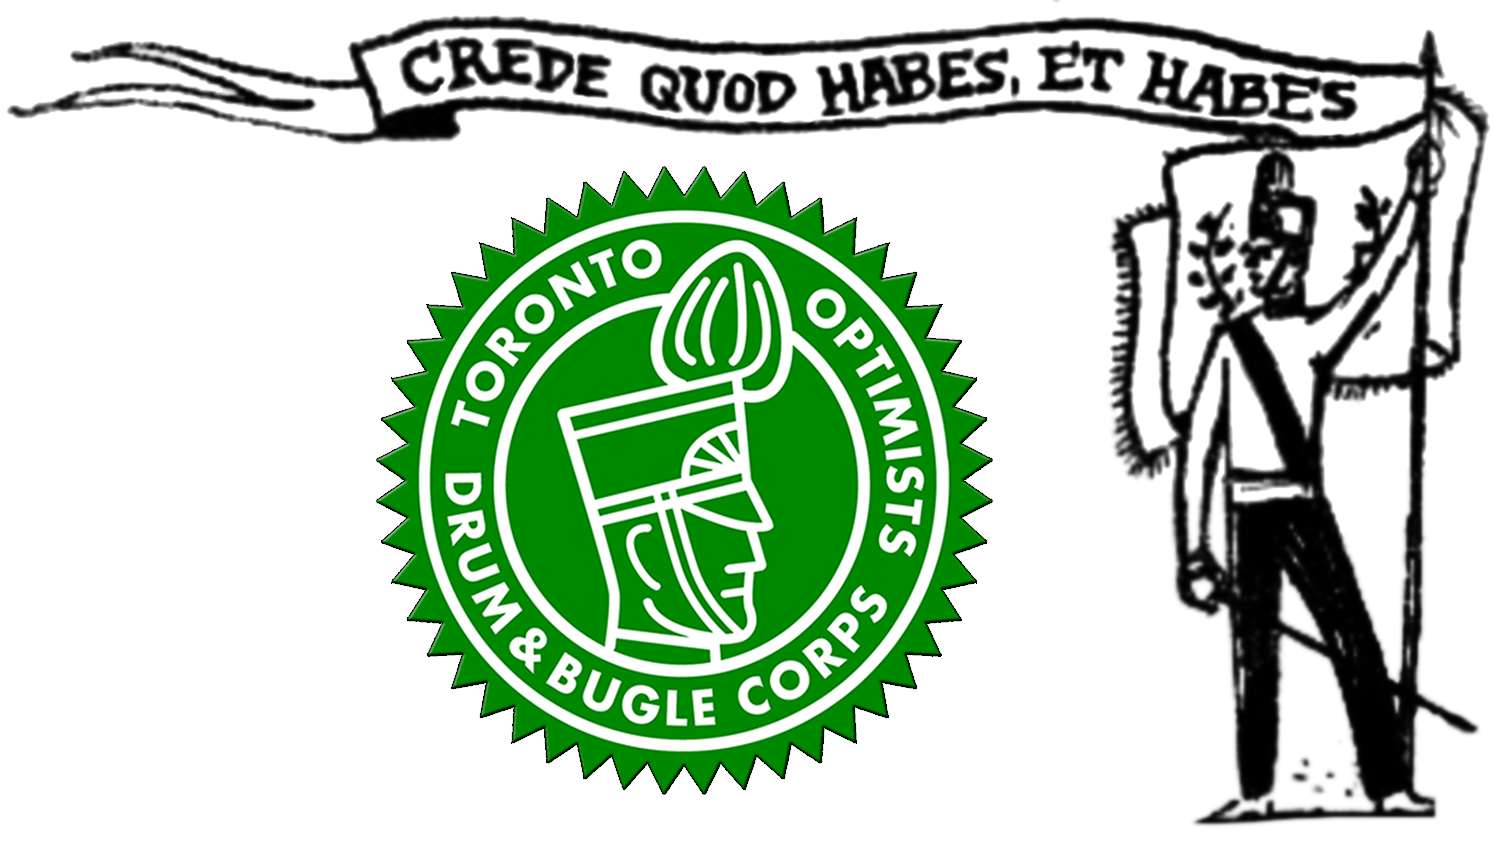 Toronto Optimists corps Crest and Motto